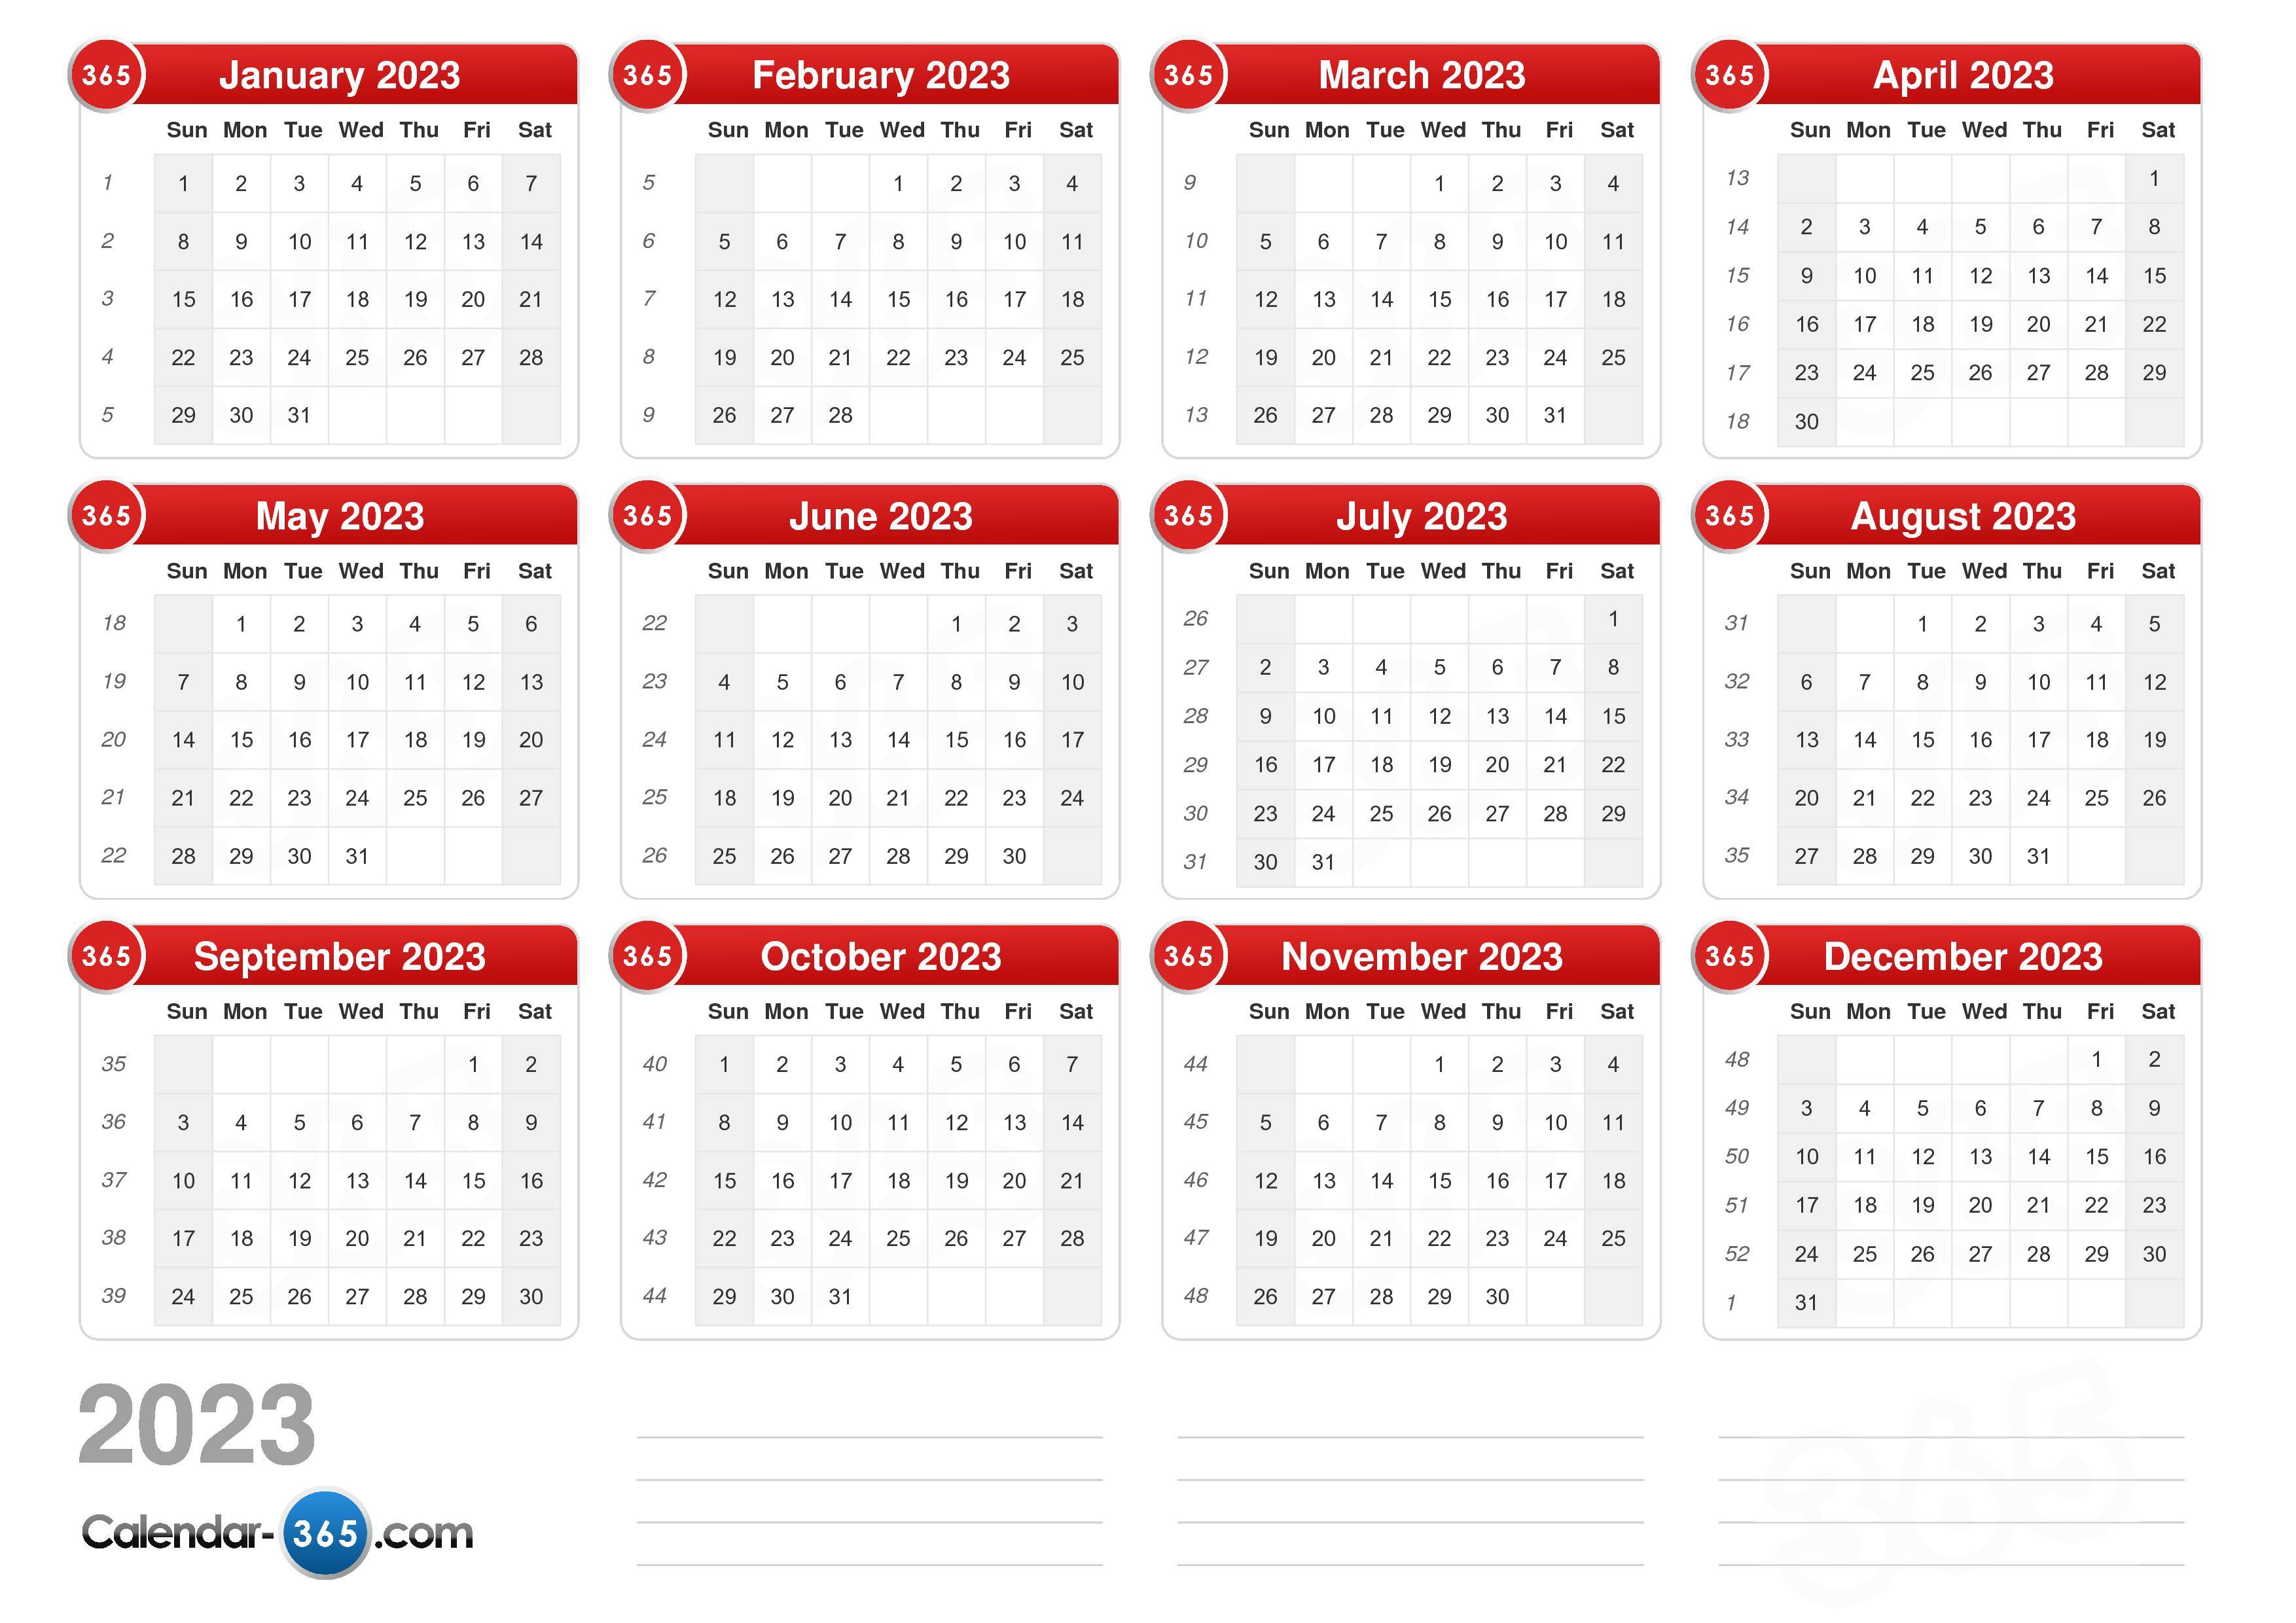 Ysu Spring 2023 Calendar 2023 Calendar